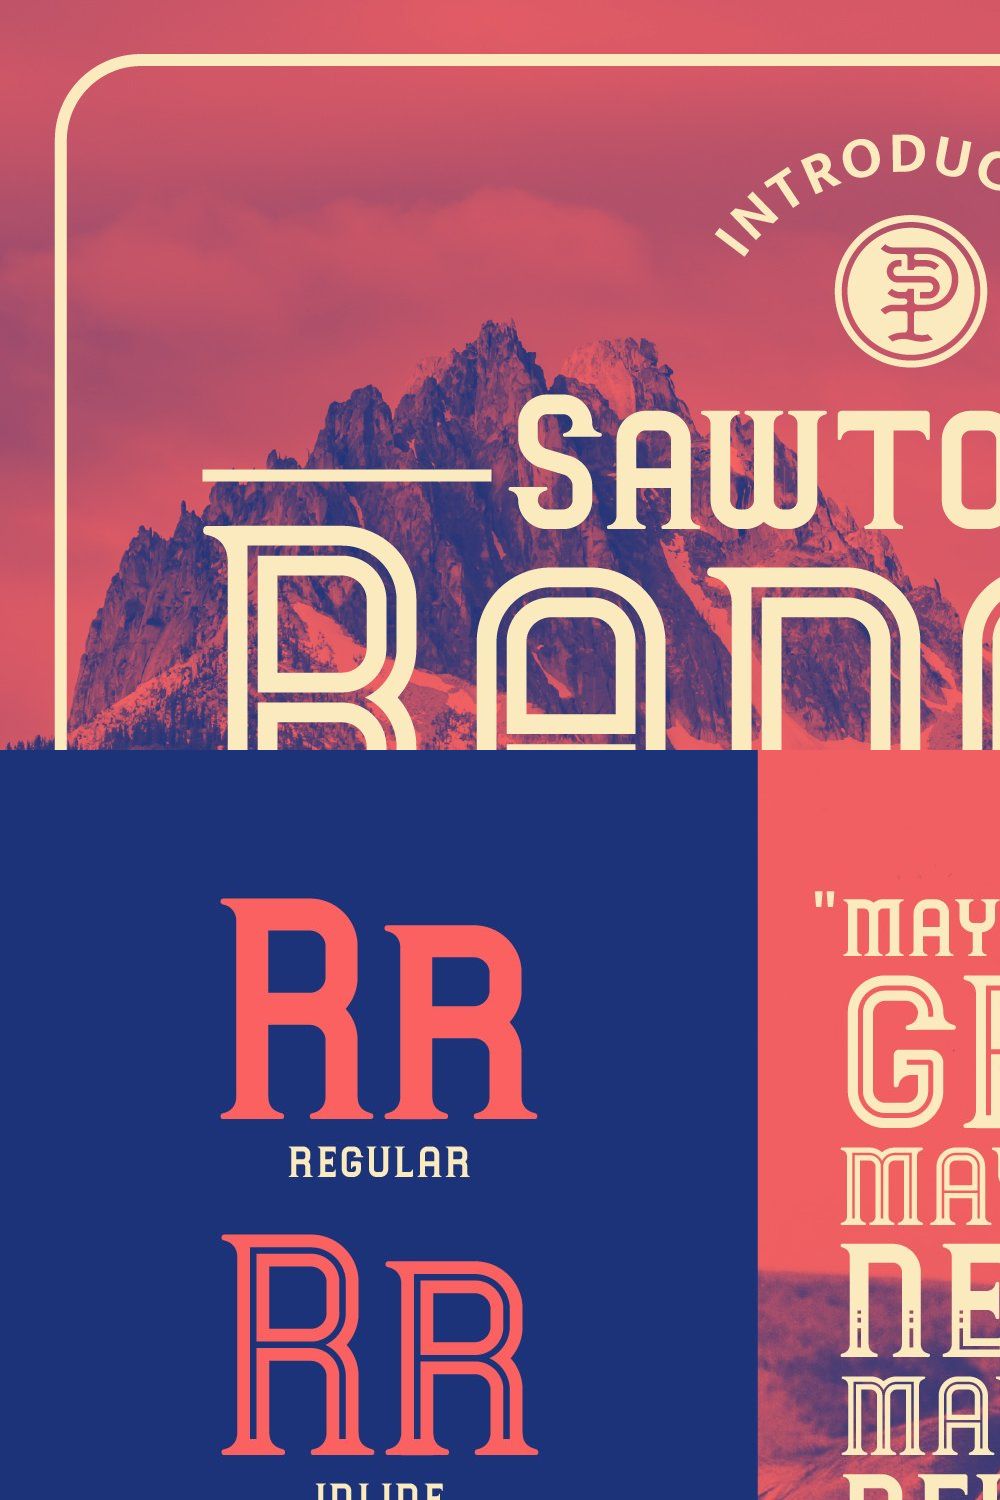 Sawtooth Ranger - Serif Display Font pinterest preview image.